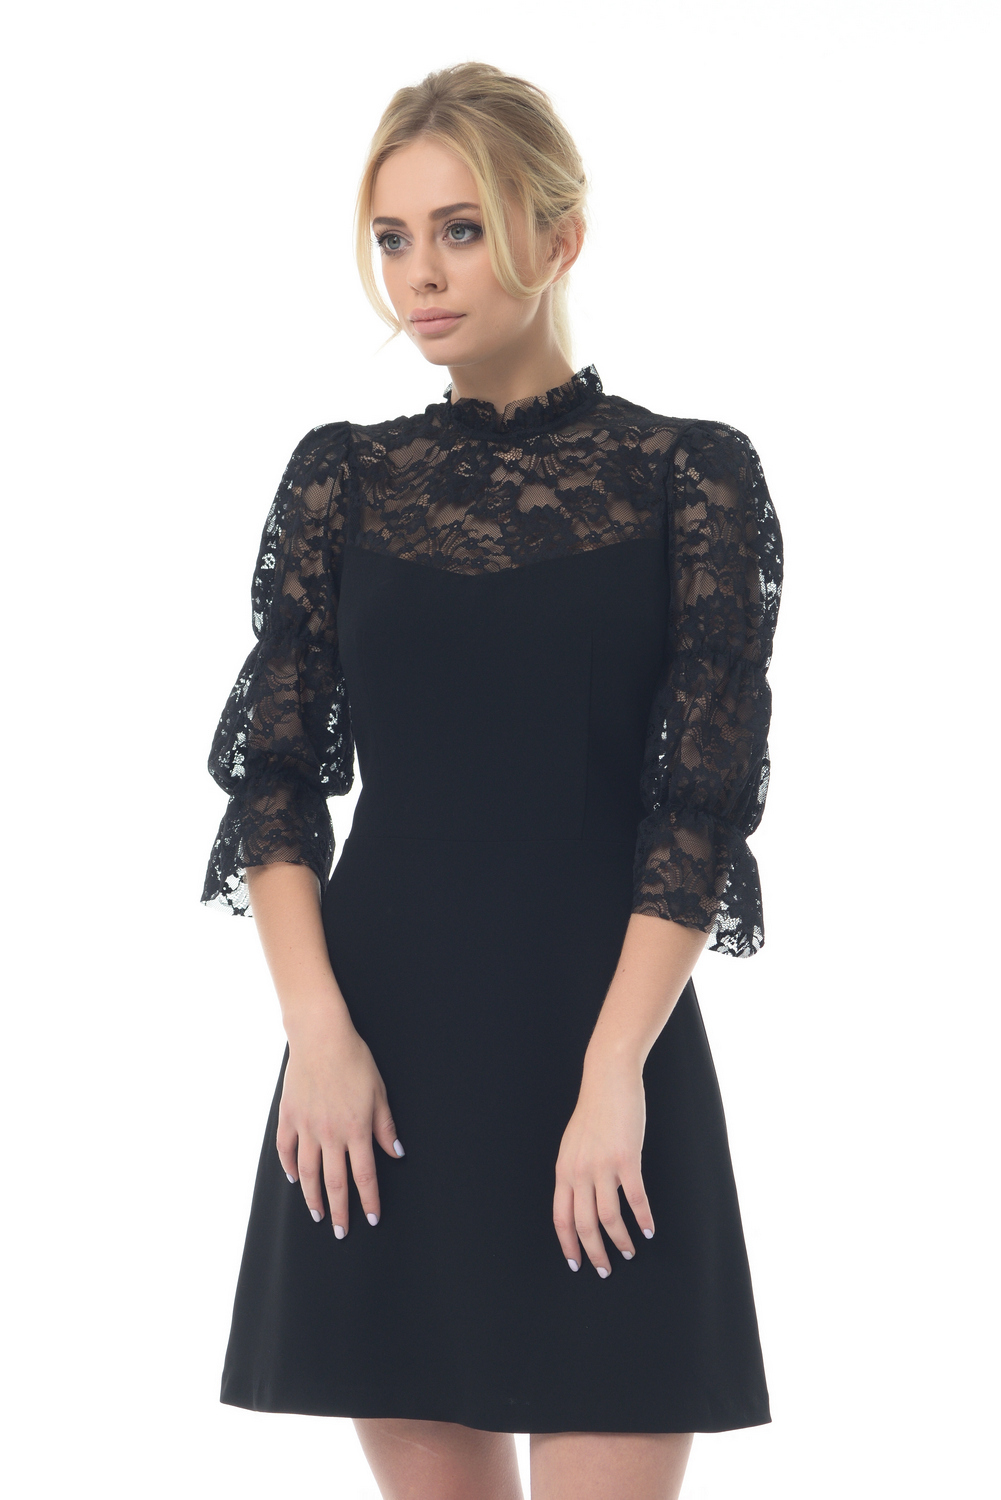 Buy Women Black Guipure Lace Elegant little black dress, Knee length Everning party dress by Arefeva